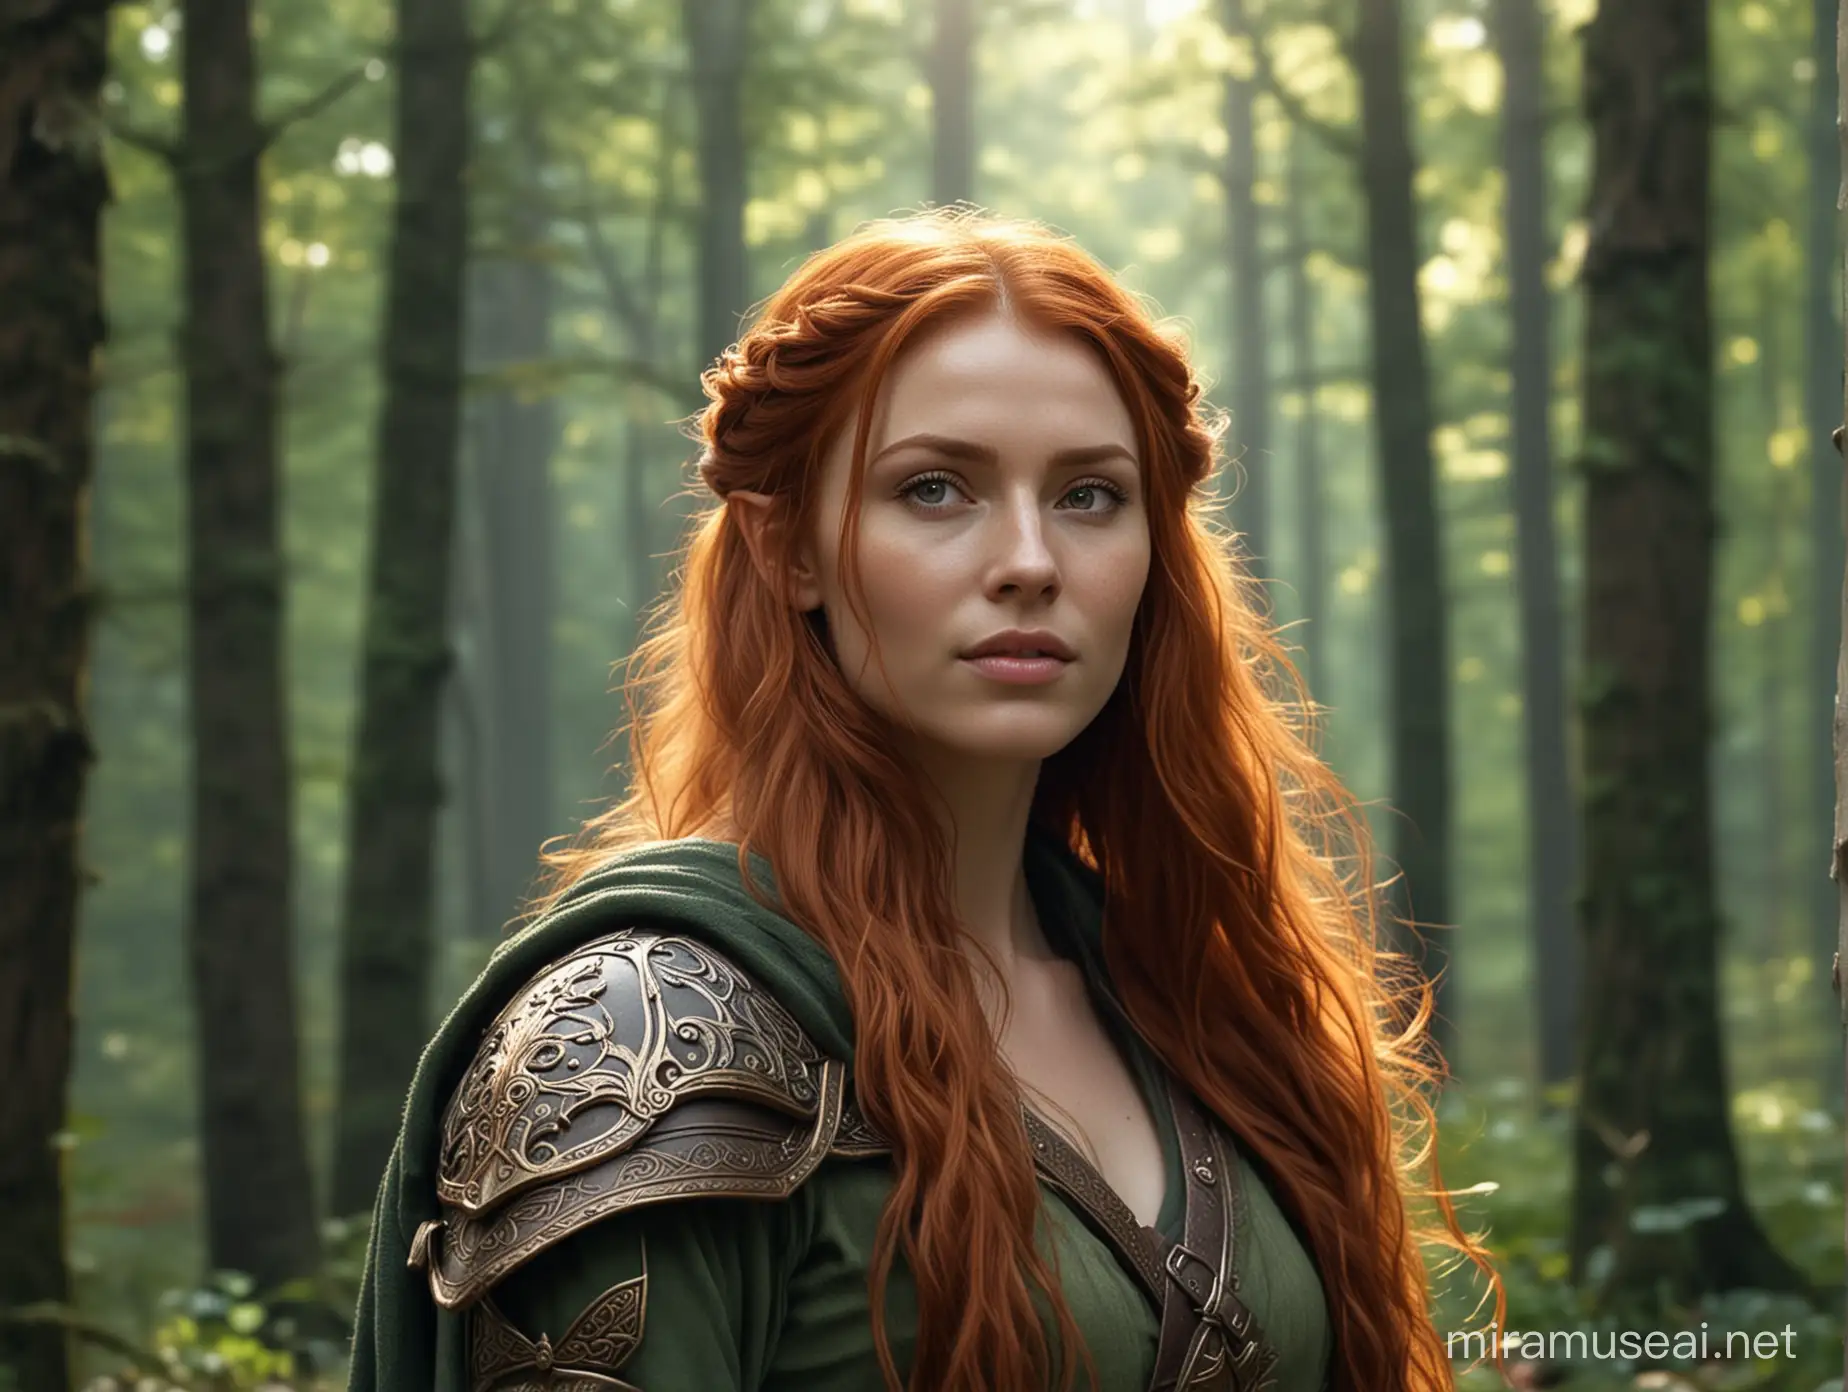 Enigmatic Redhead Elf Warrior Woman in Forest 8k UltraRealistic Portrait